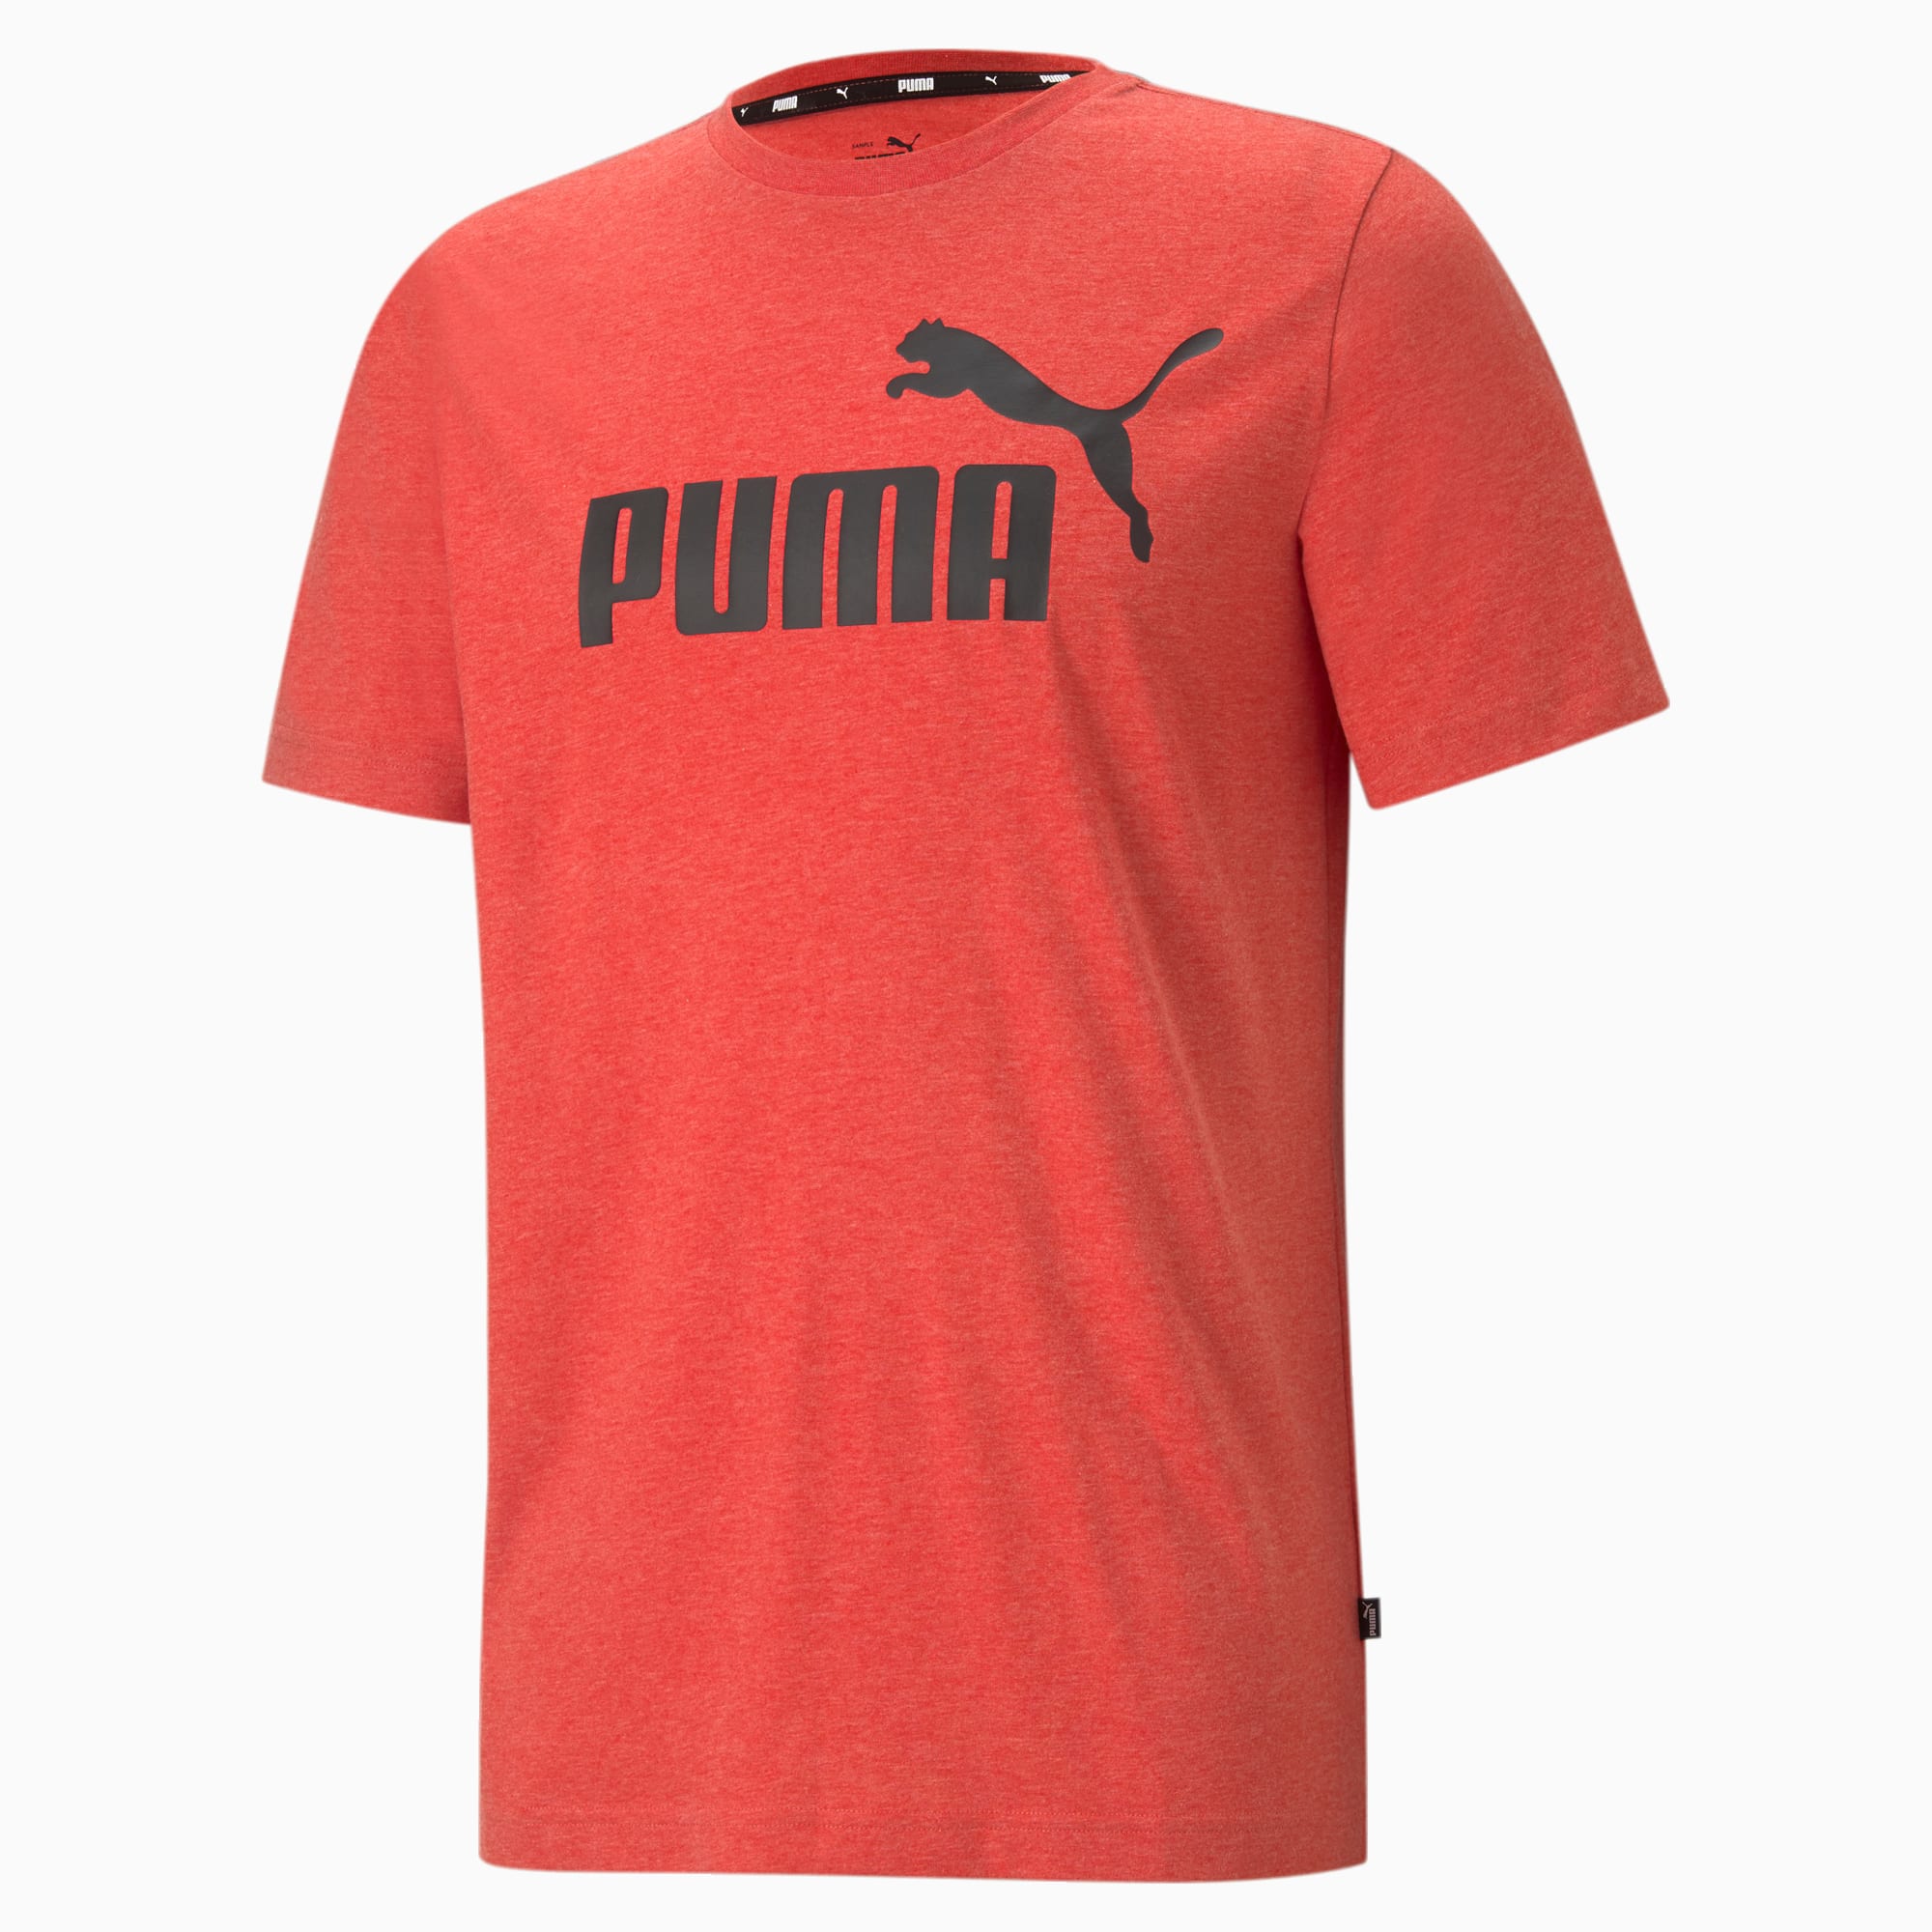 PUMA Essentials Heather Men's T-Shirt, High Risk Red, Size 5XL, Clothing